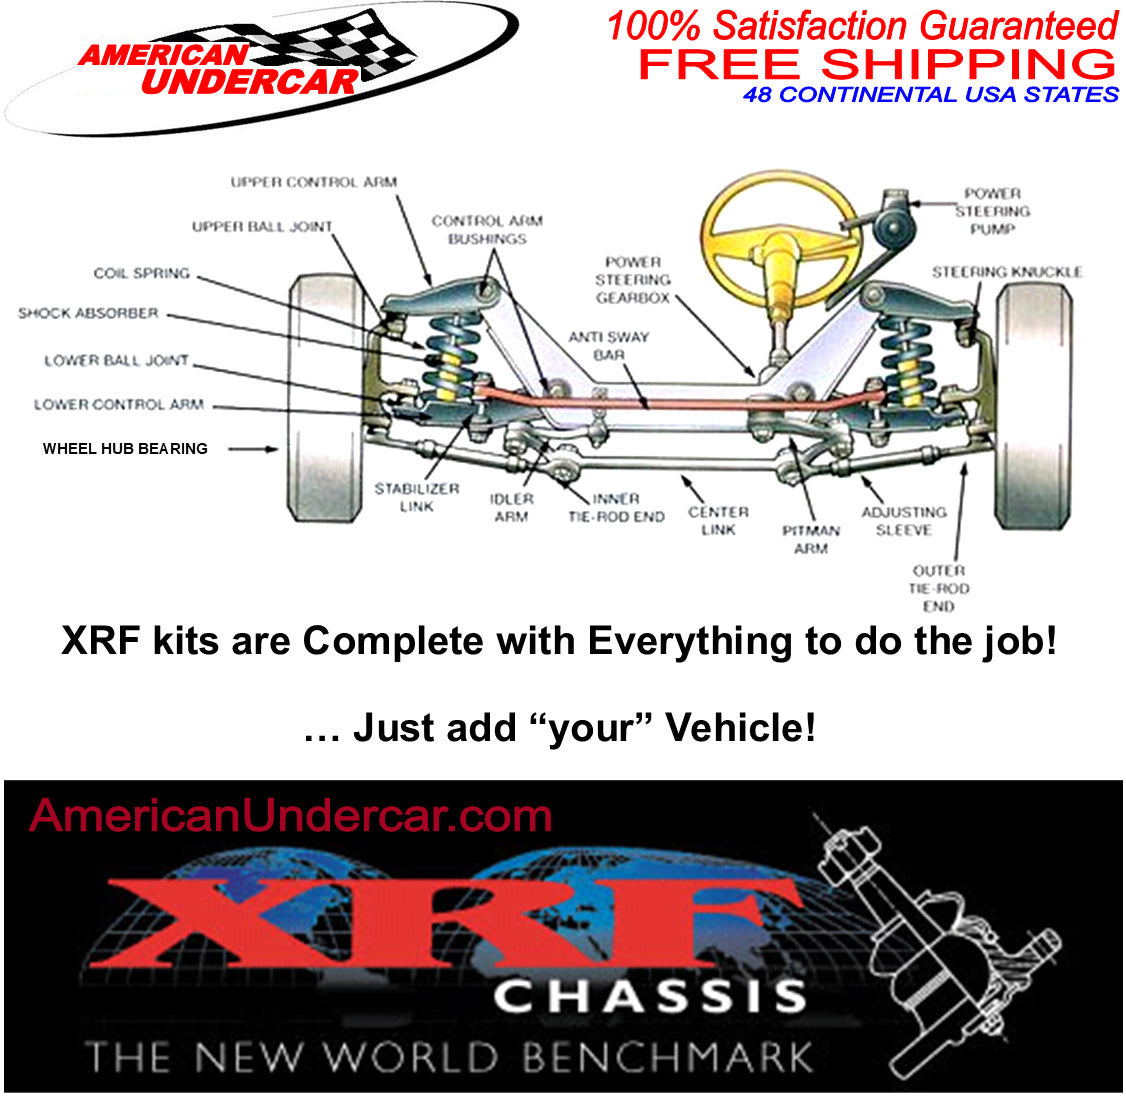 XRF Ball Joint Drag Link Tie Rod Track Bushing Kit for 2000-2002 Dodge Ram 2500, 3500 4x4